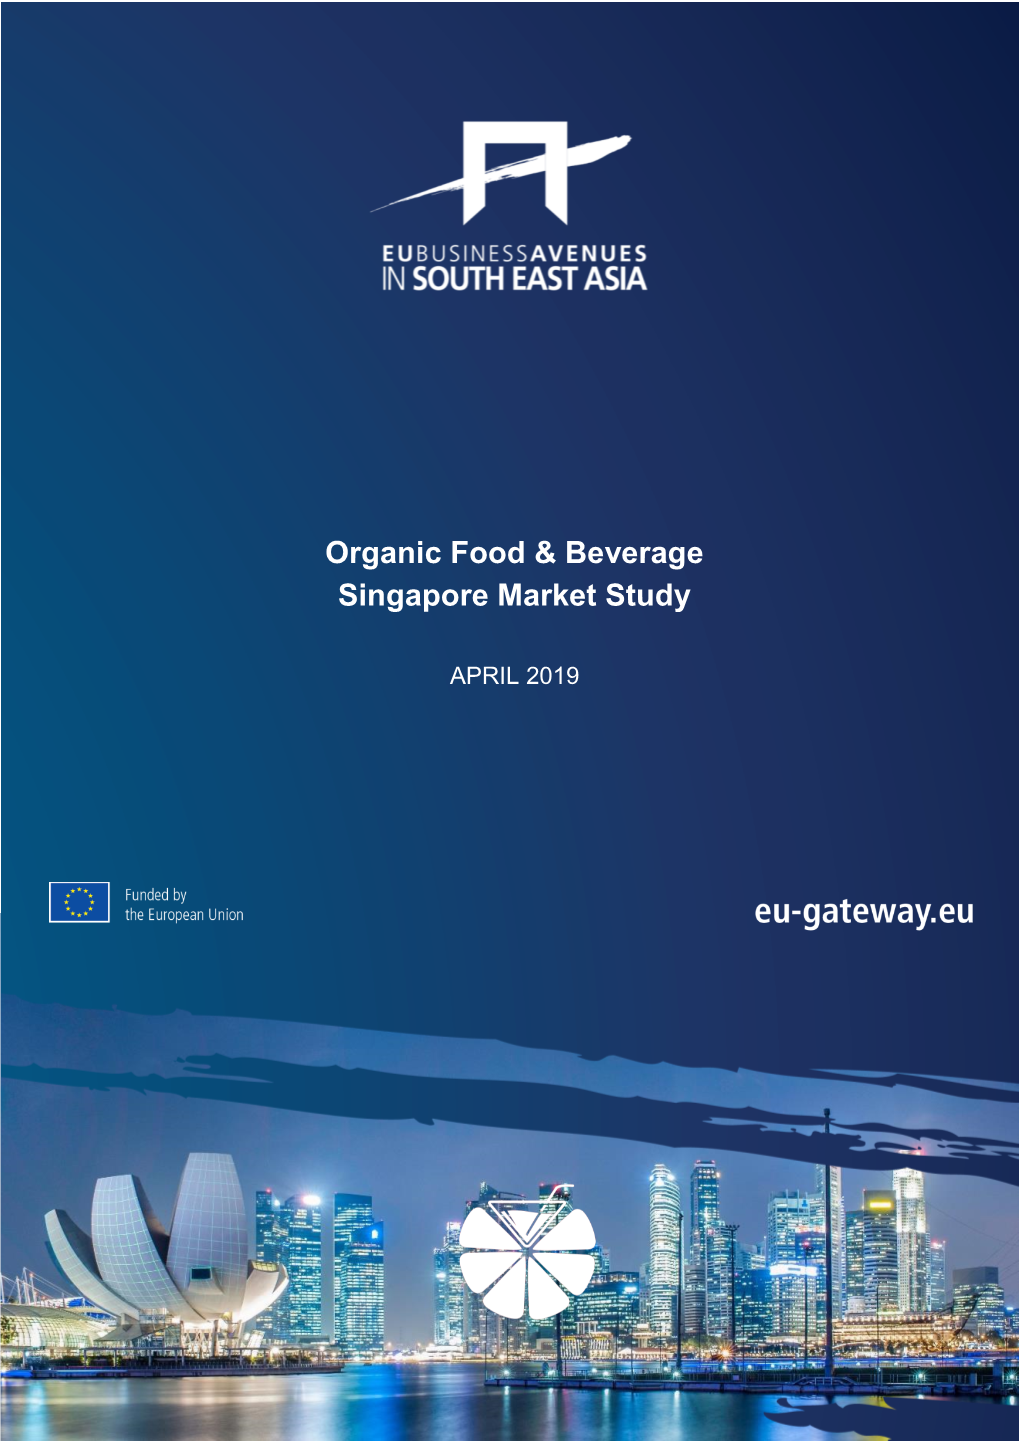 Organic Food & Beverage Sector (Singapore Market Study)